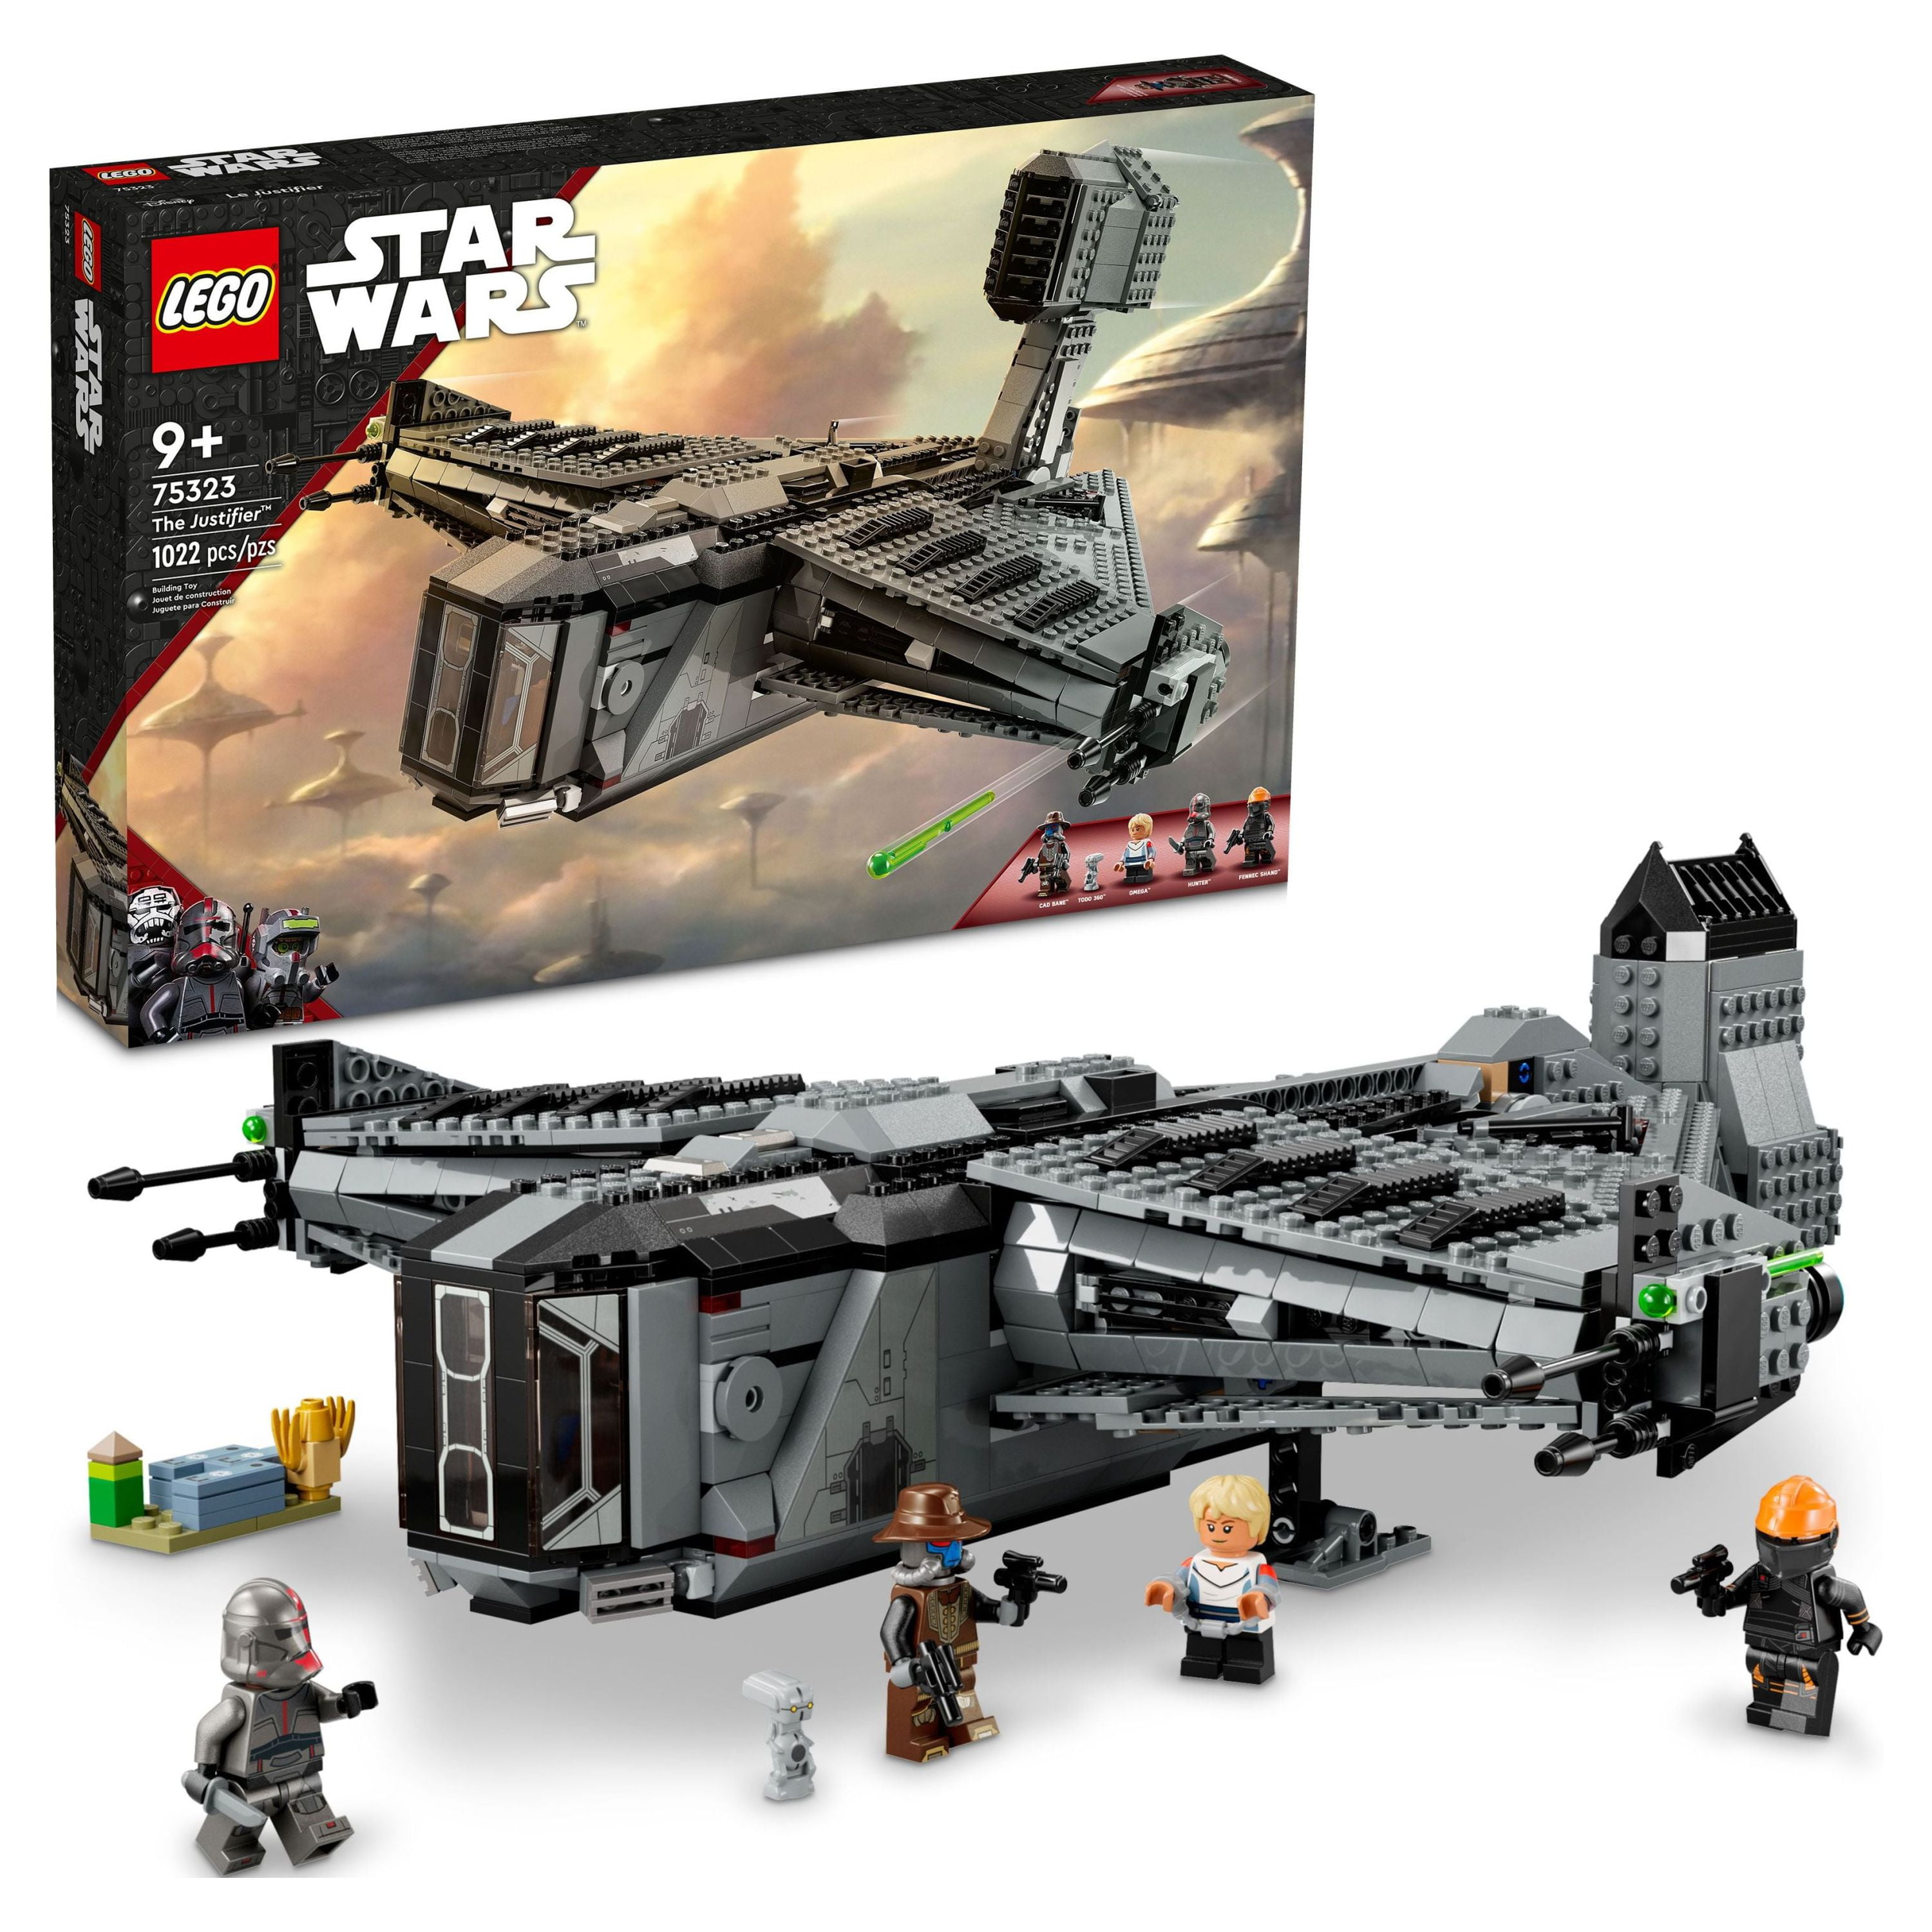 LEGO Star Wars / The Last Jedi LEGO Sets